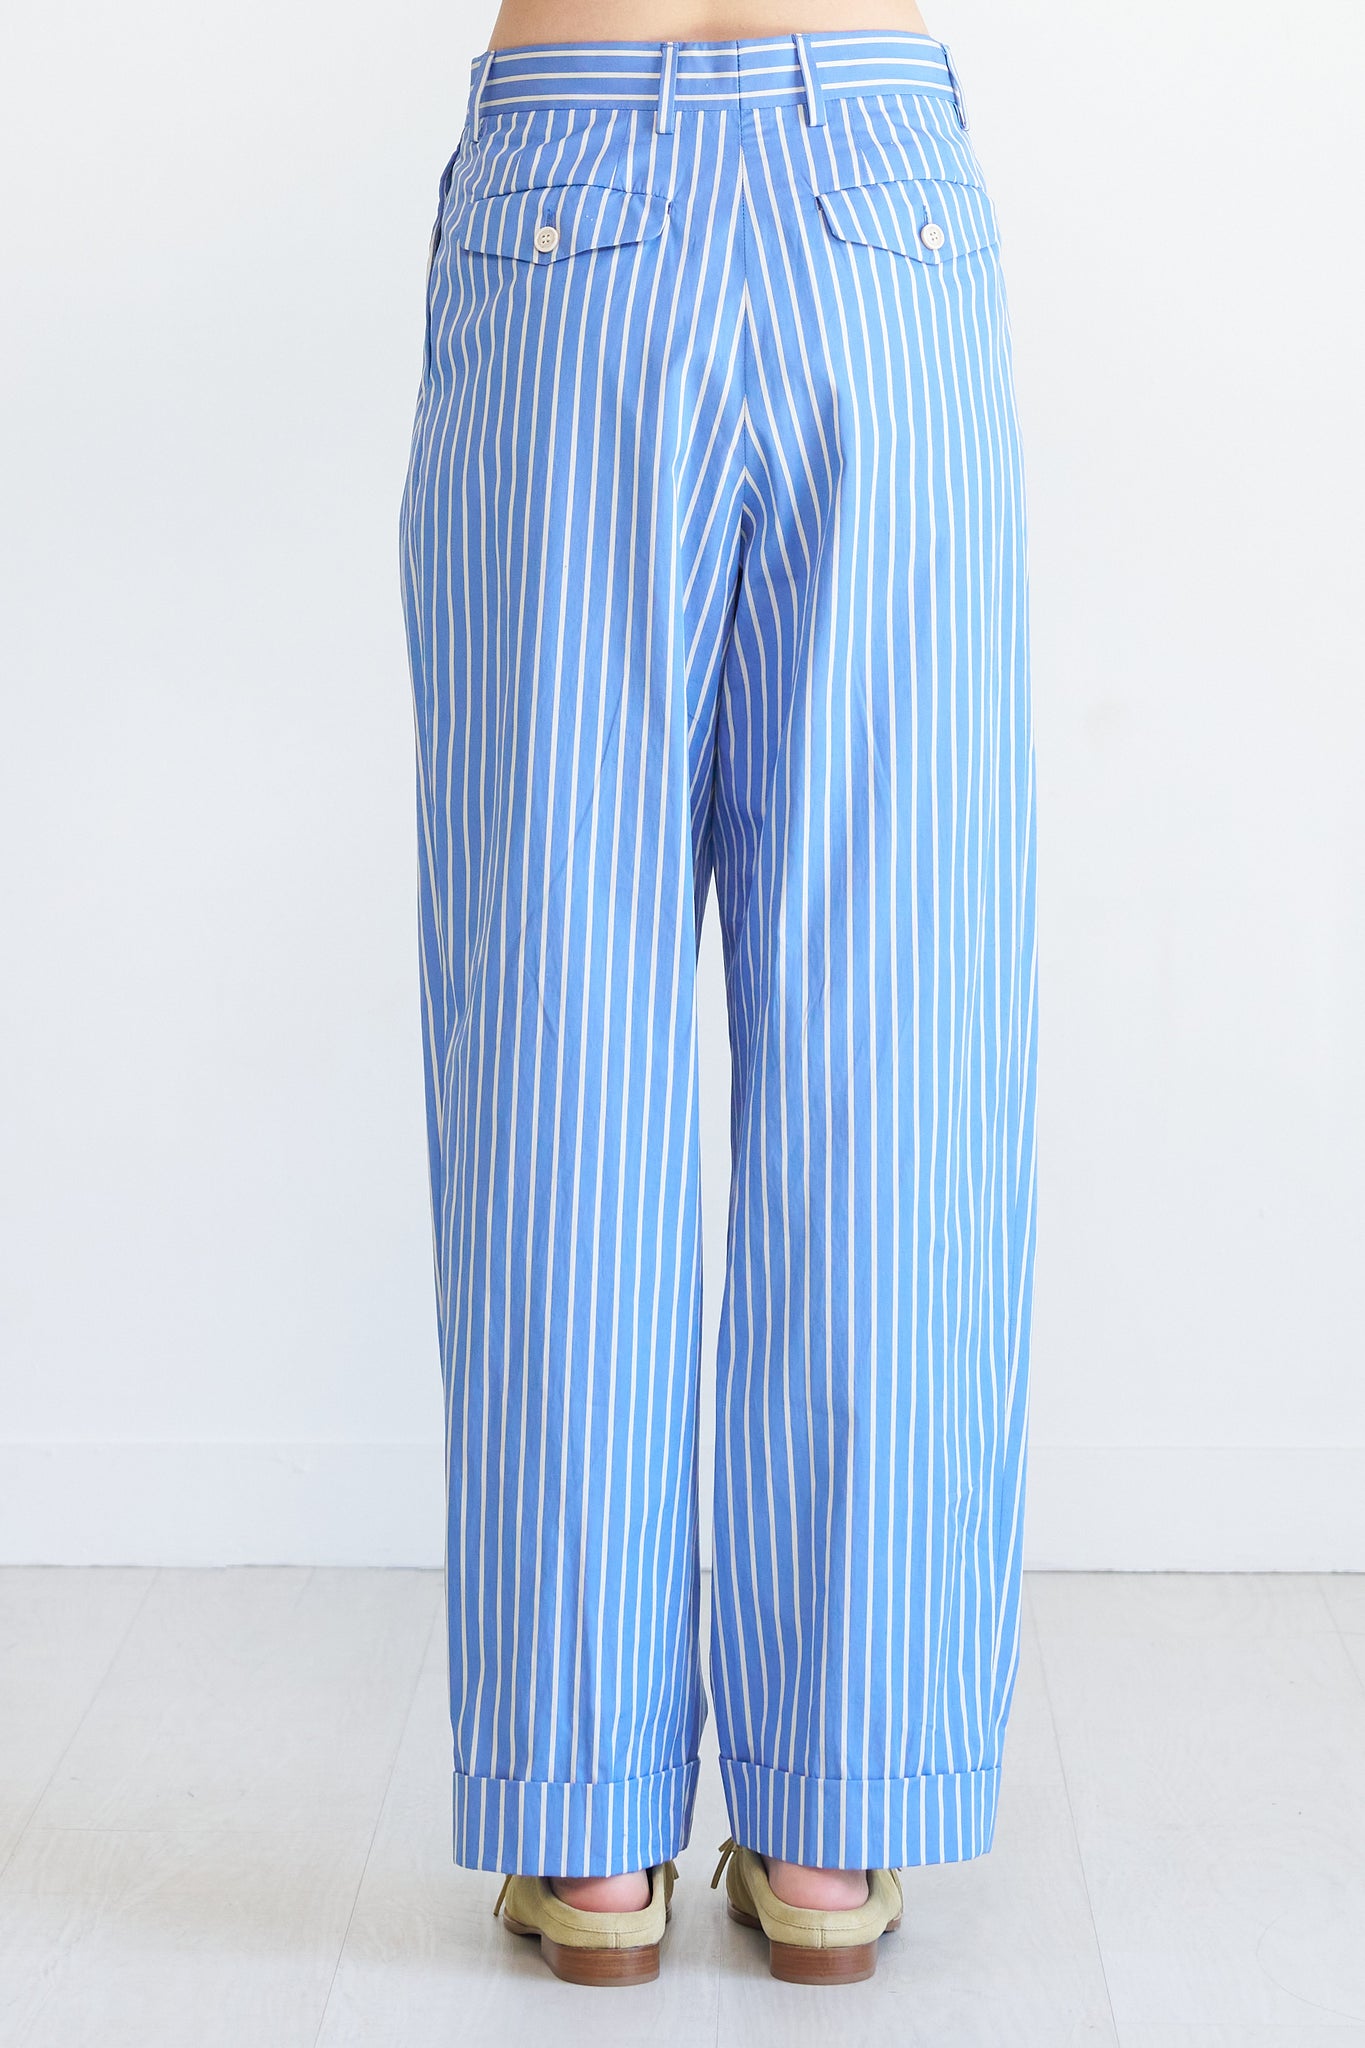 DRIES VAN NOTEN - Stripe Pants, Light Blue